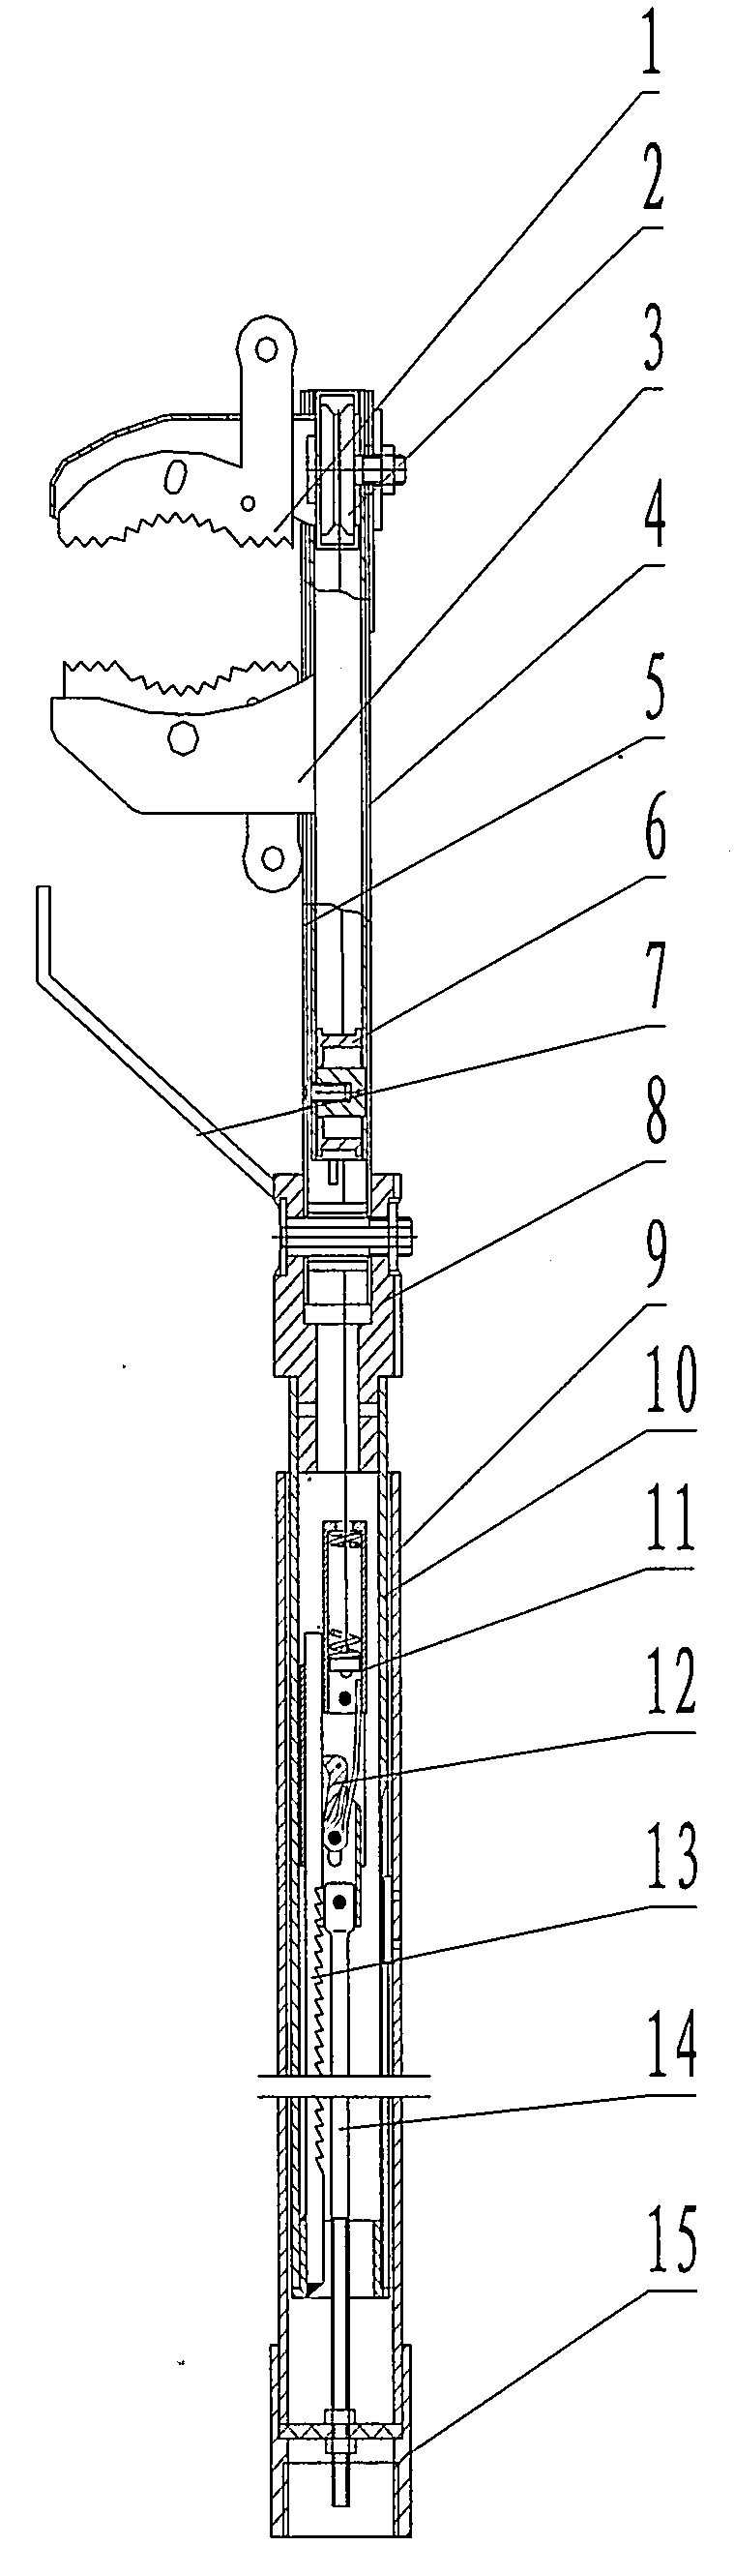 Multi-angle operating rod